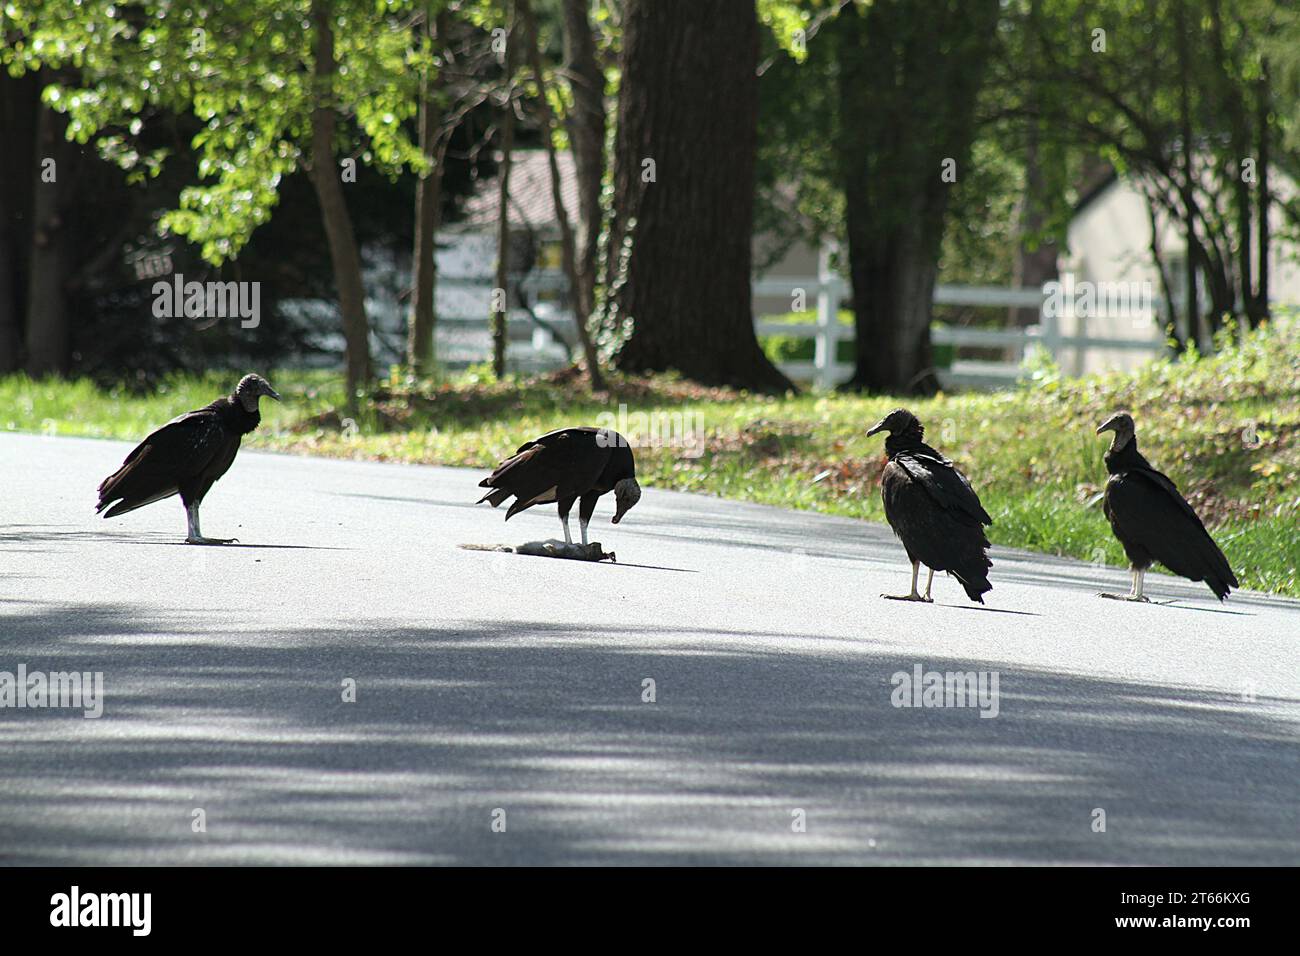 Turkey vultures feeding on a run-over squirrel on a neighborhood street in Virginia U.S.A. Stock Photo